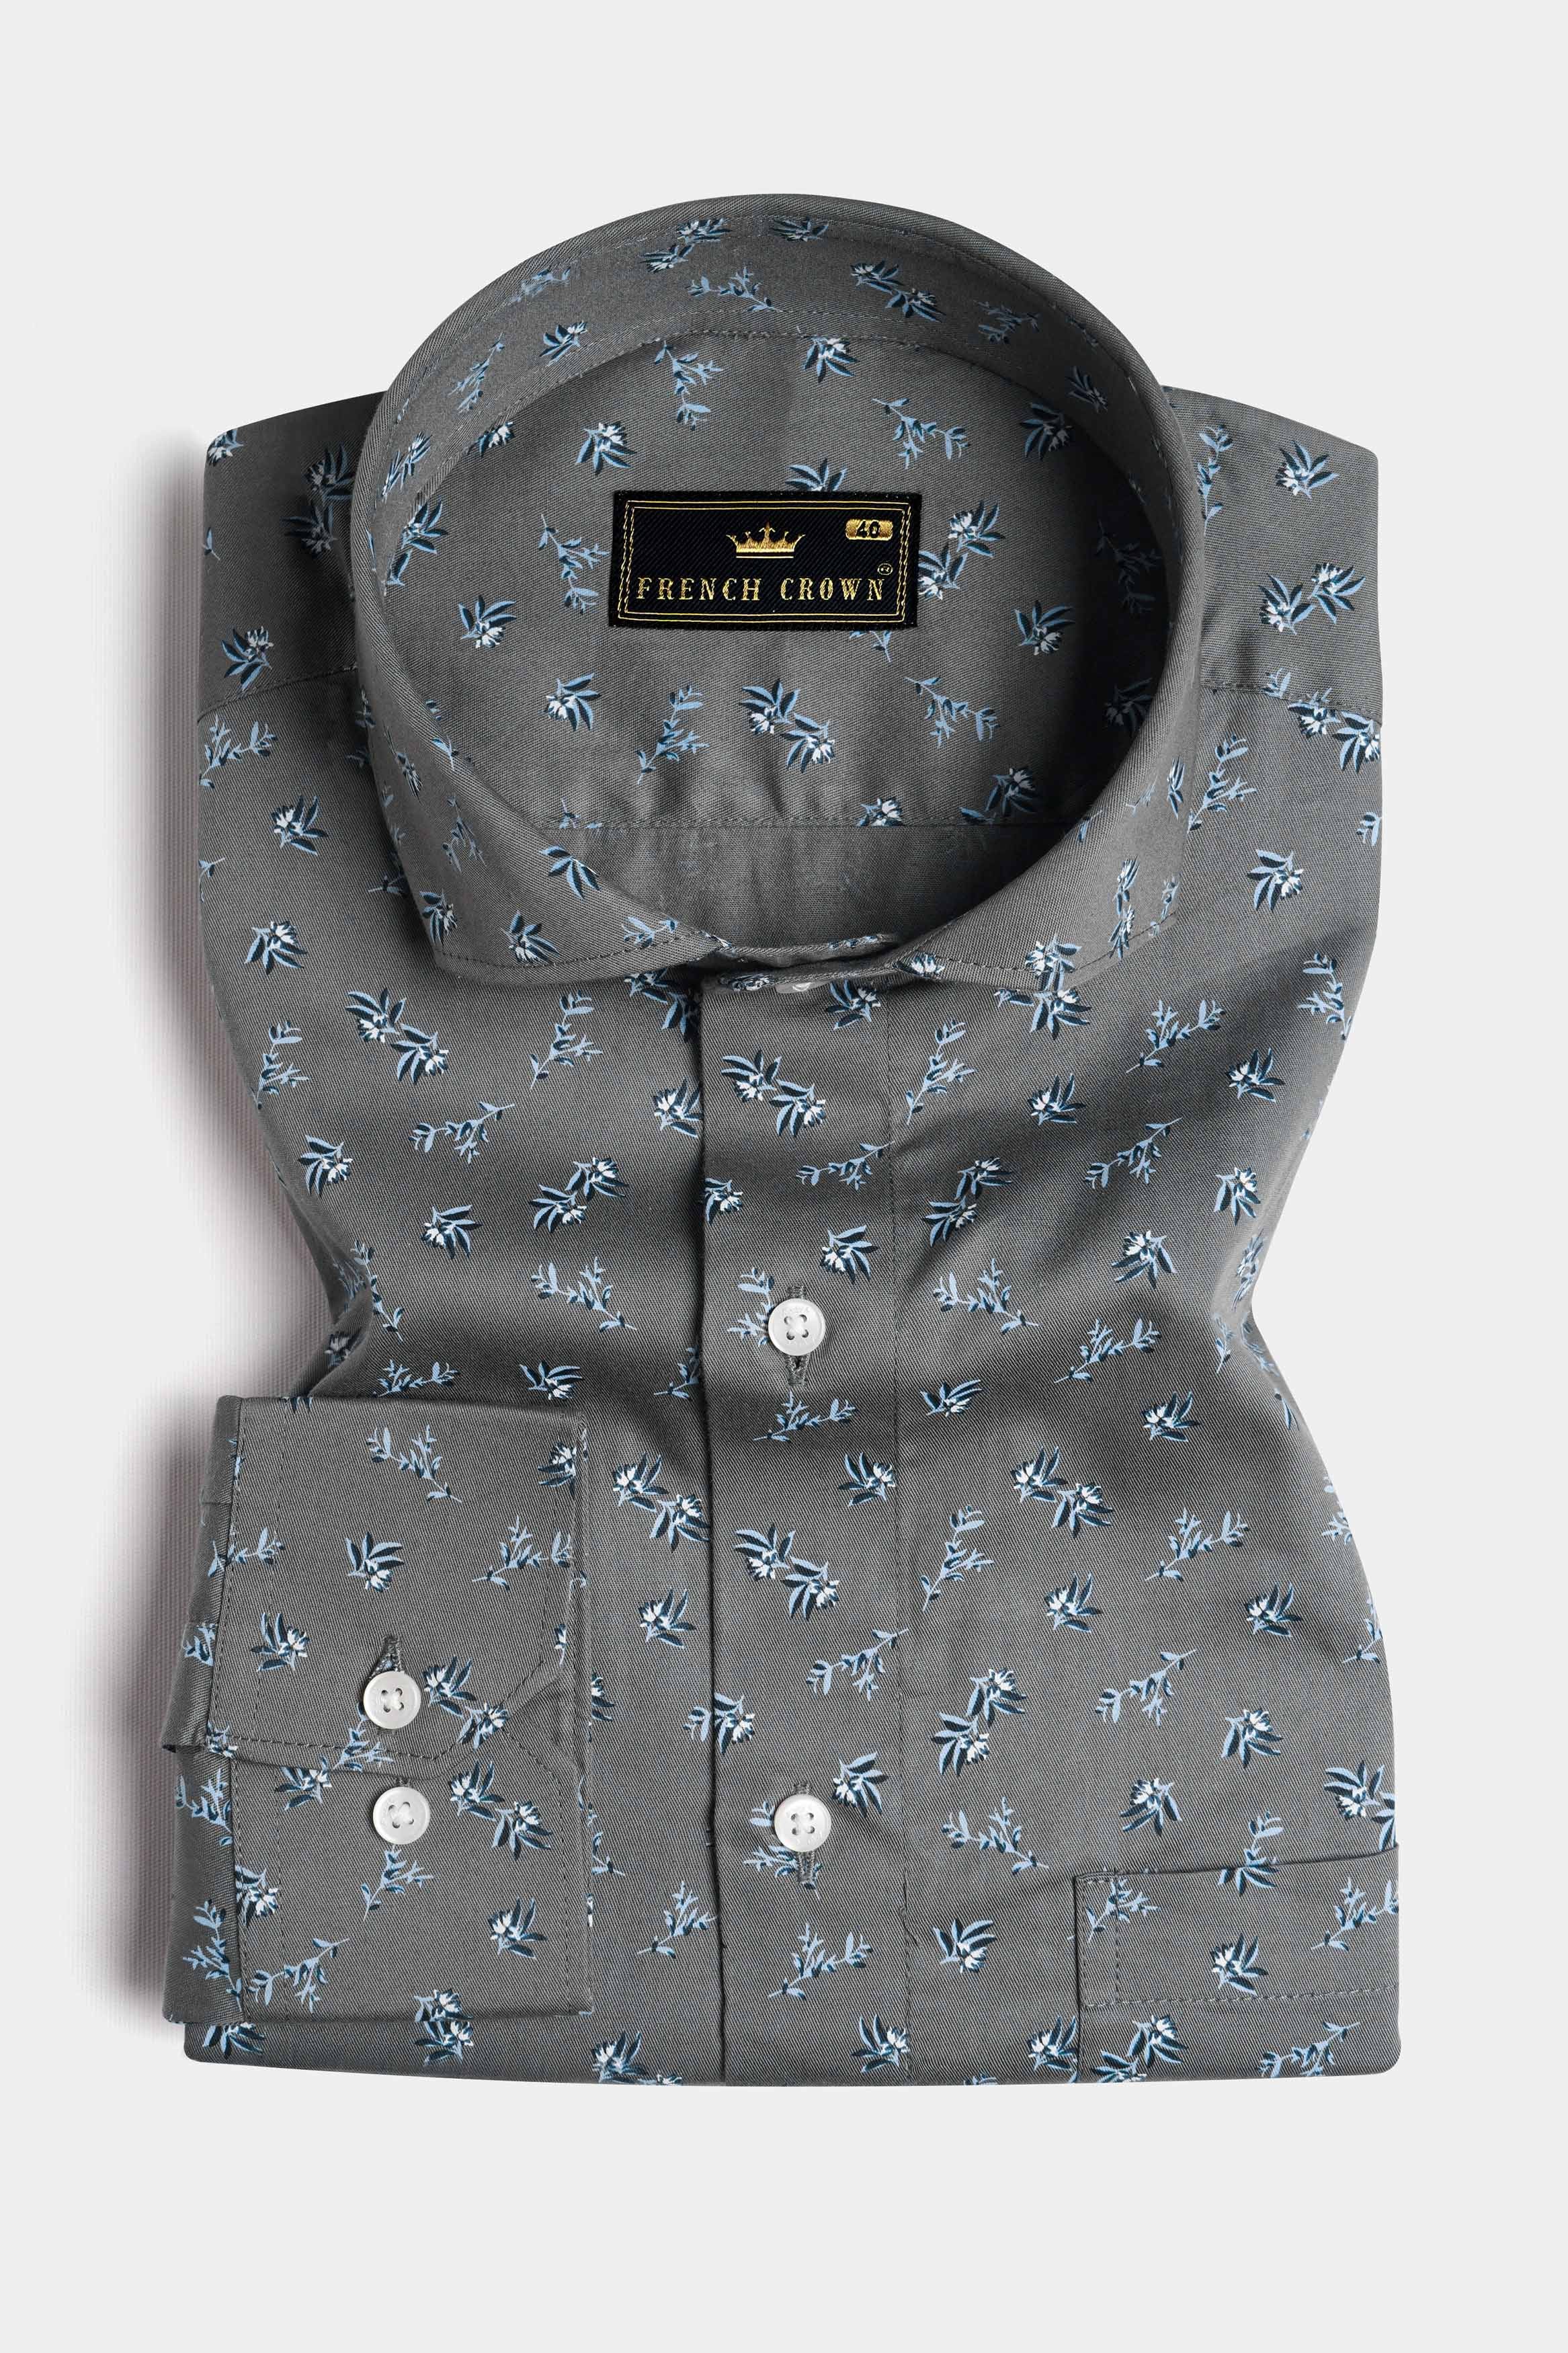 Gunsmoke Gray Leaves Printed Twill Premium Cotton Shirt